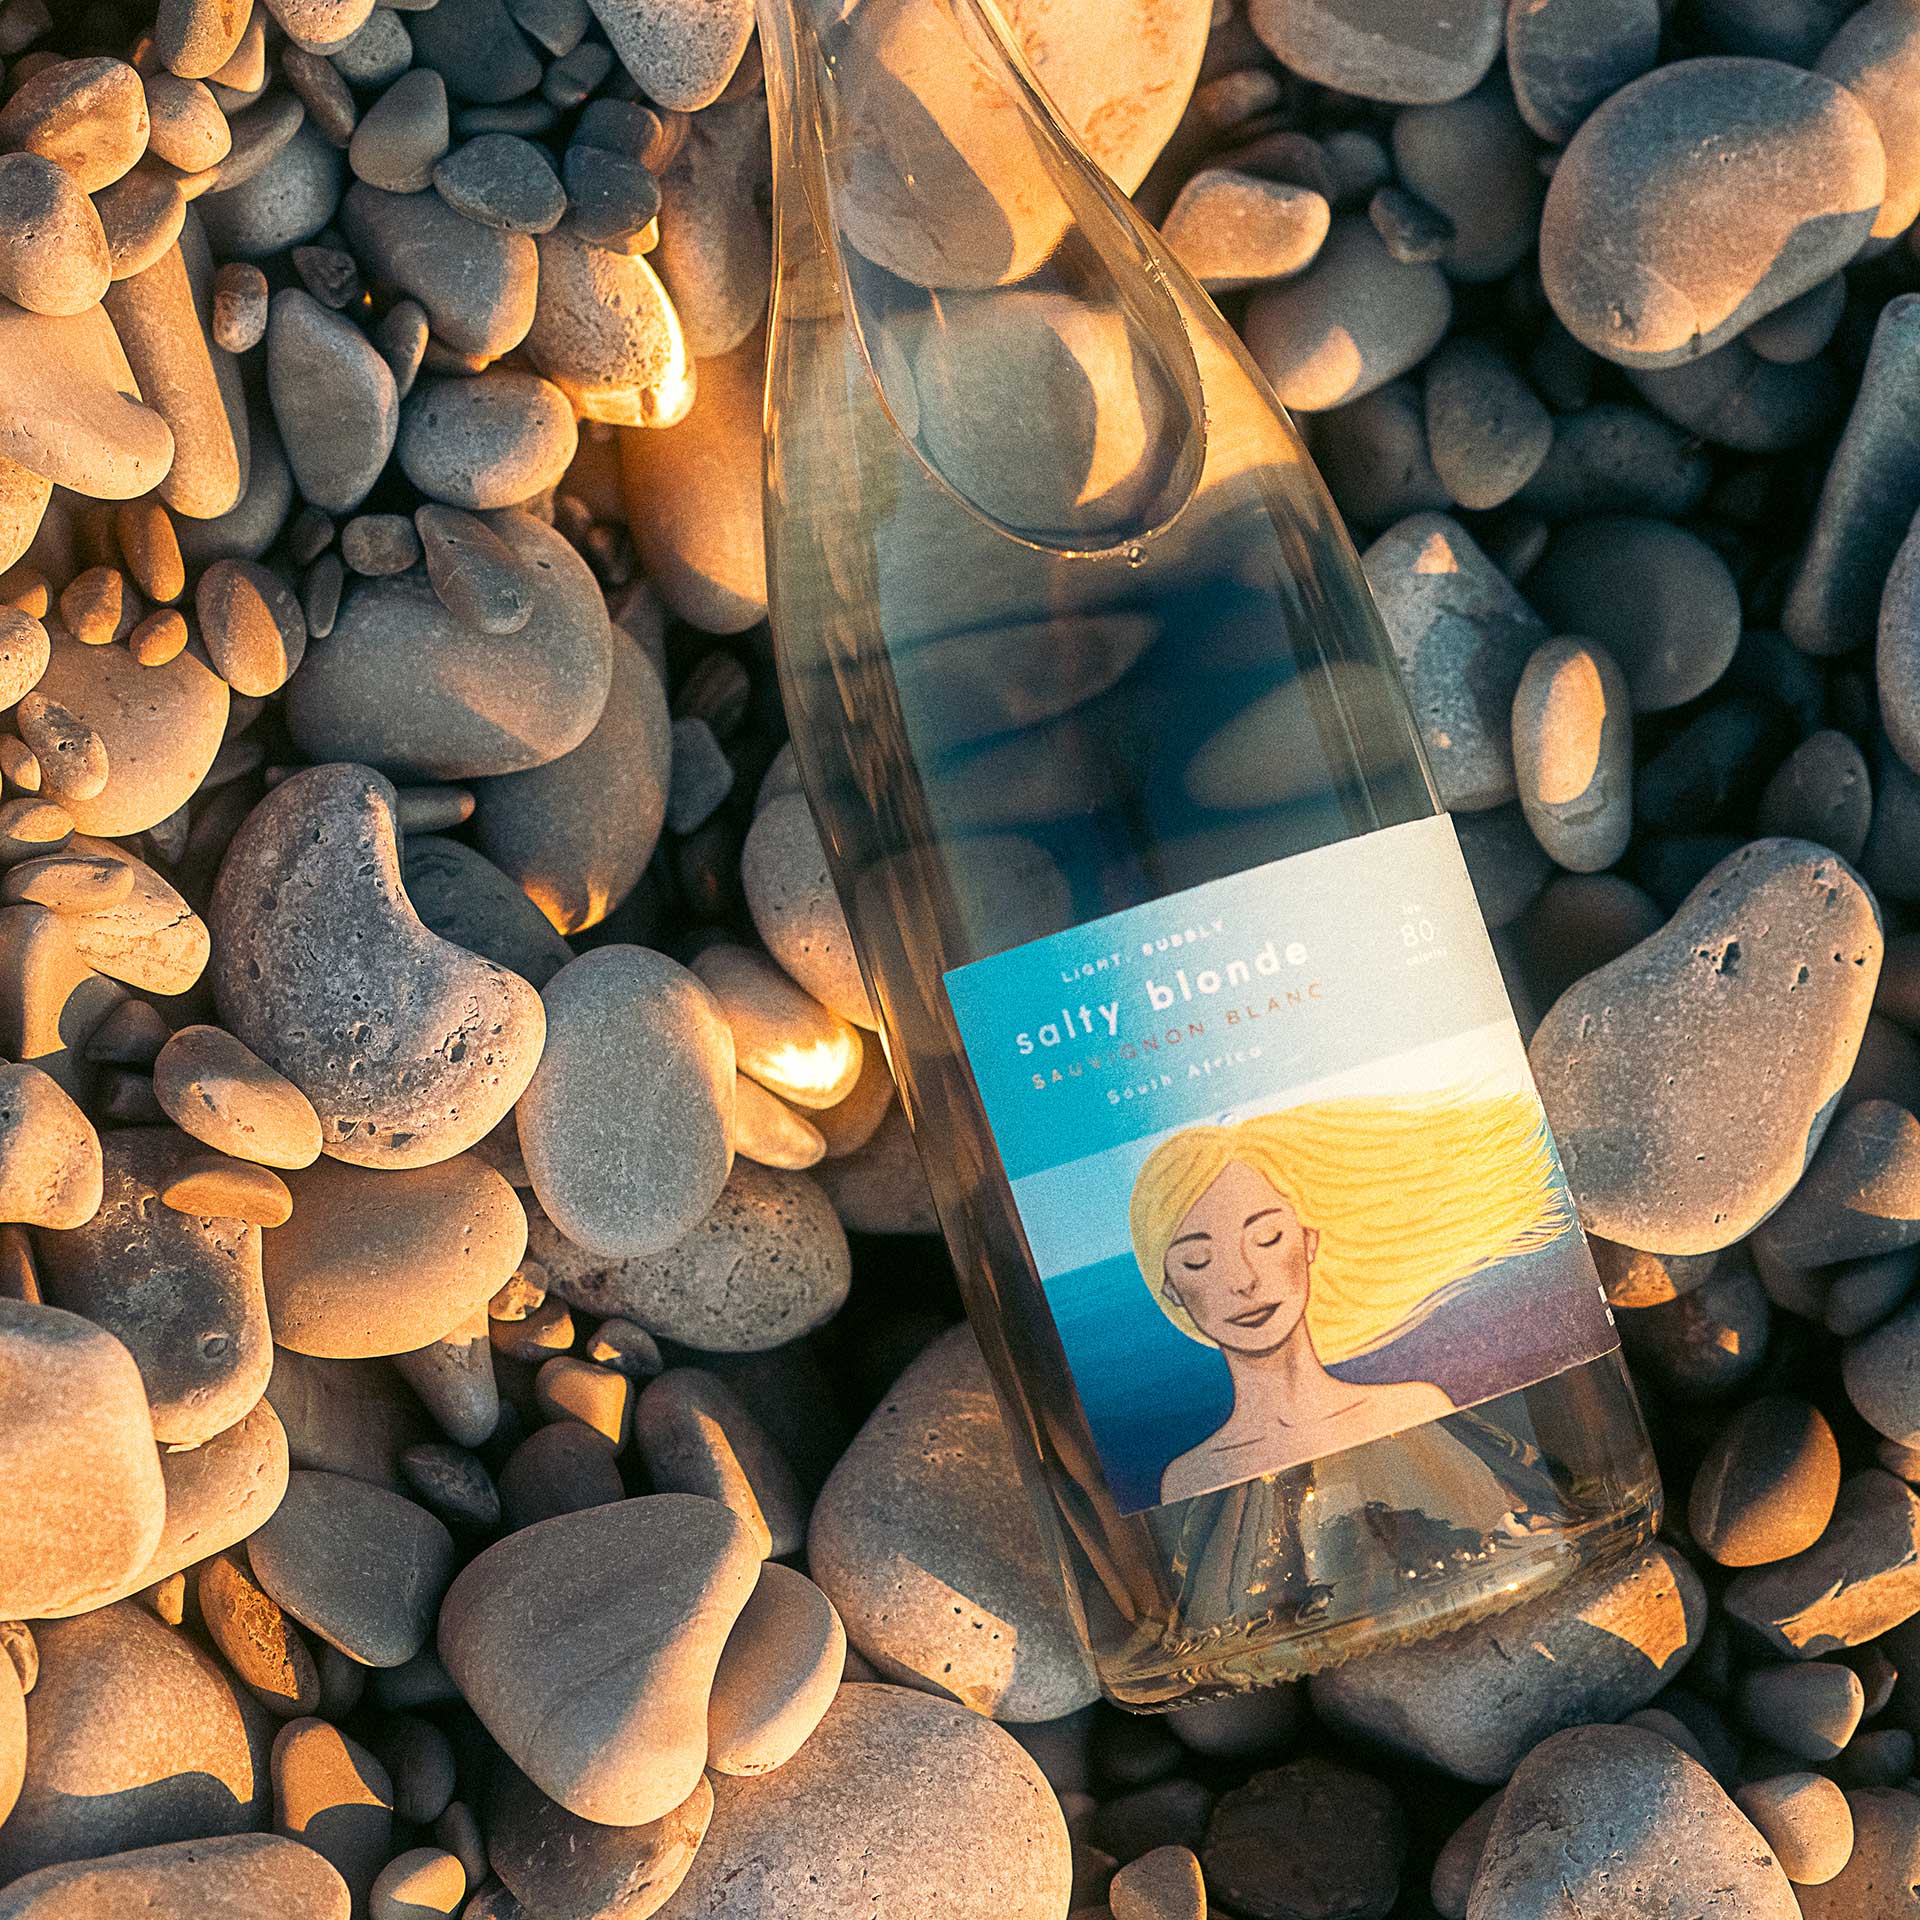 salty blonde wine bottle on stones